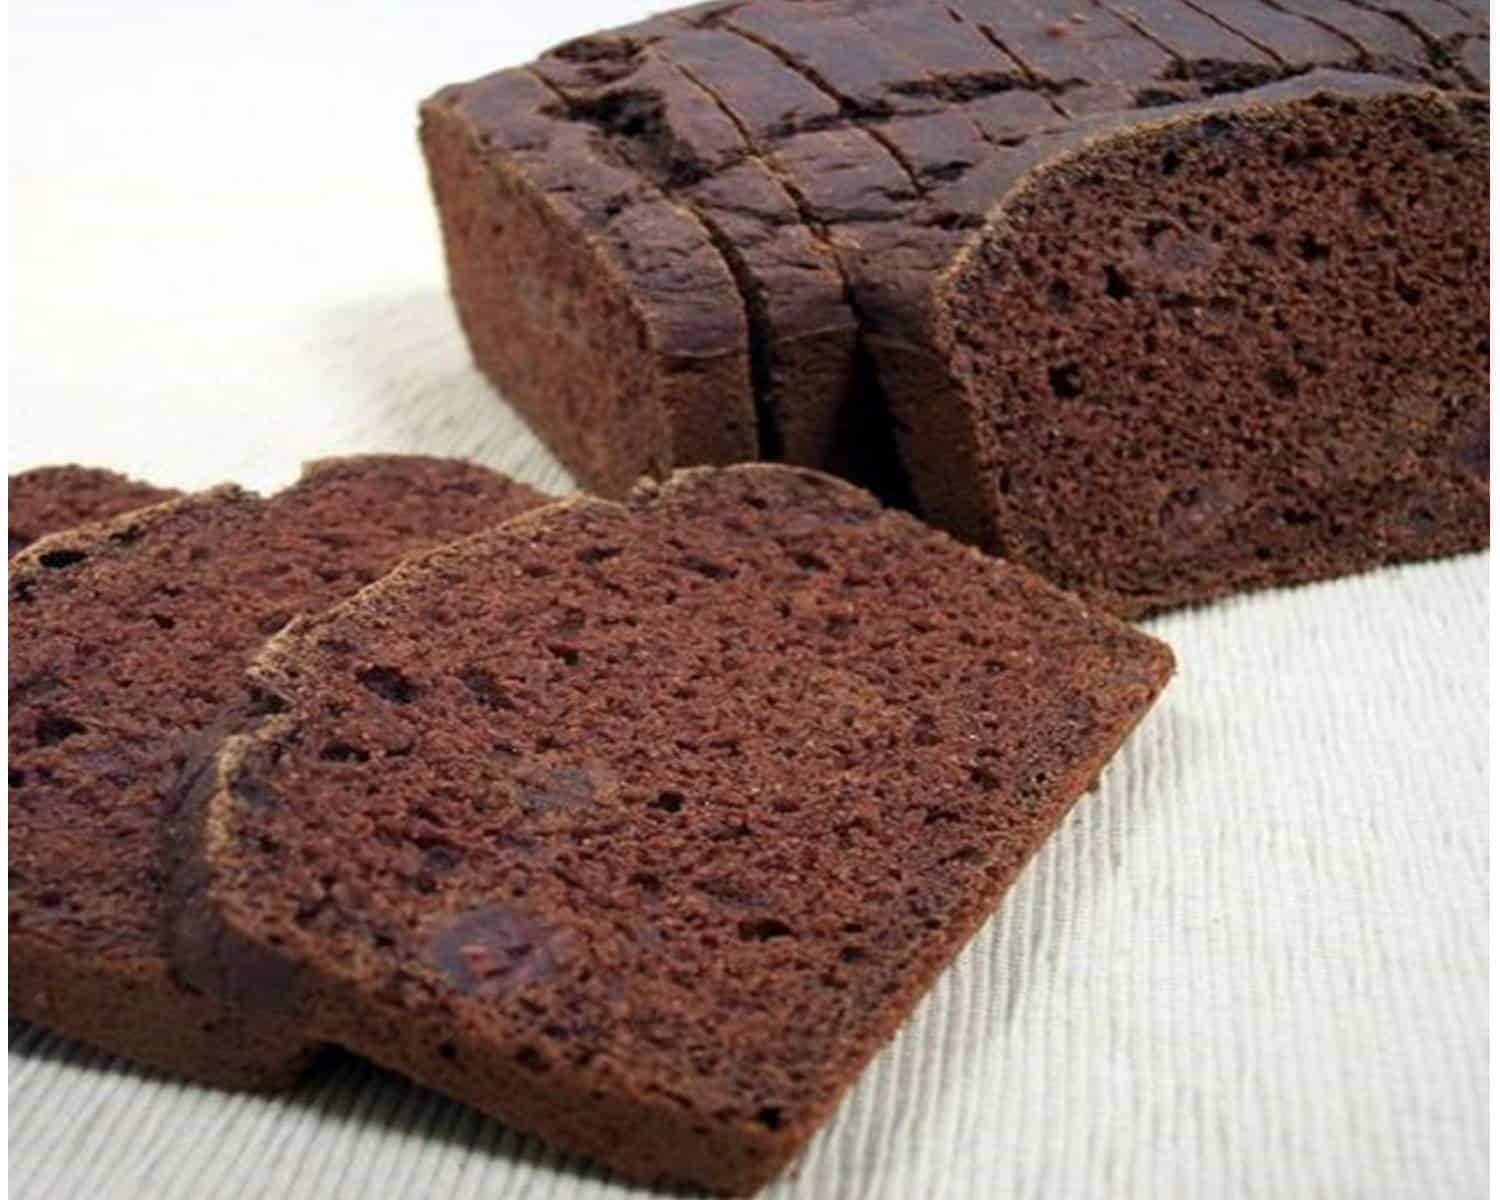 Aprenda a preparar este delicioso pão de chocolate